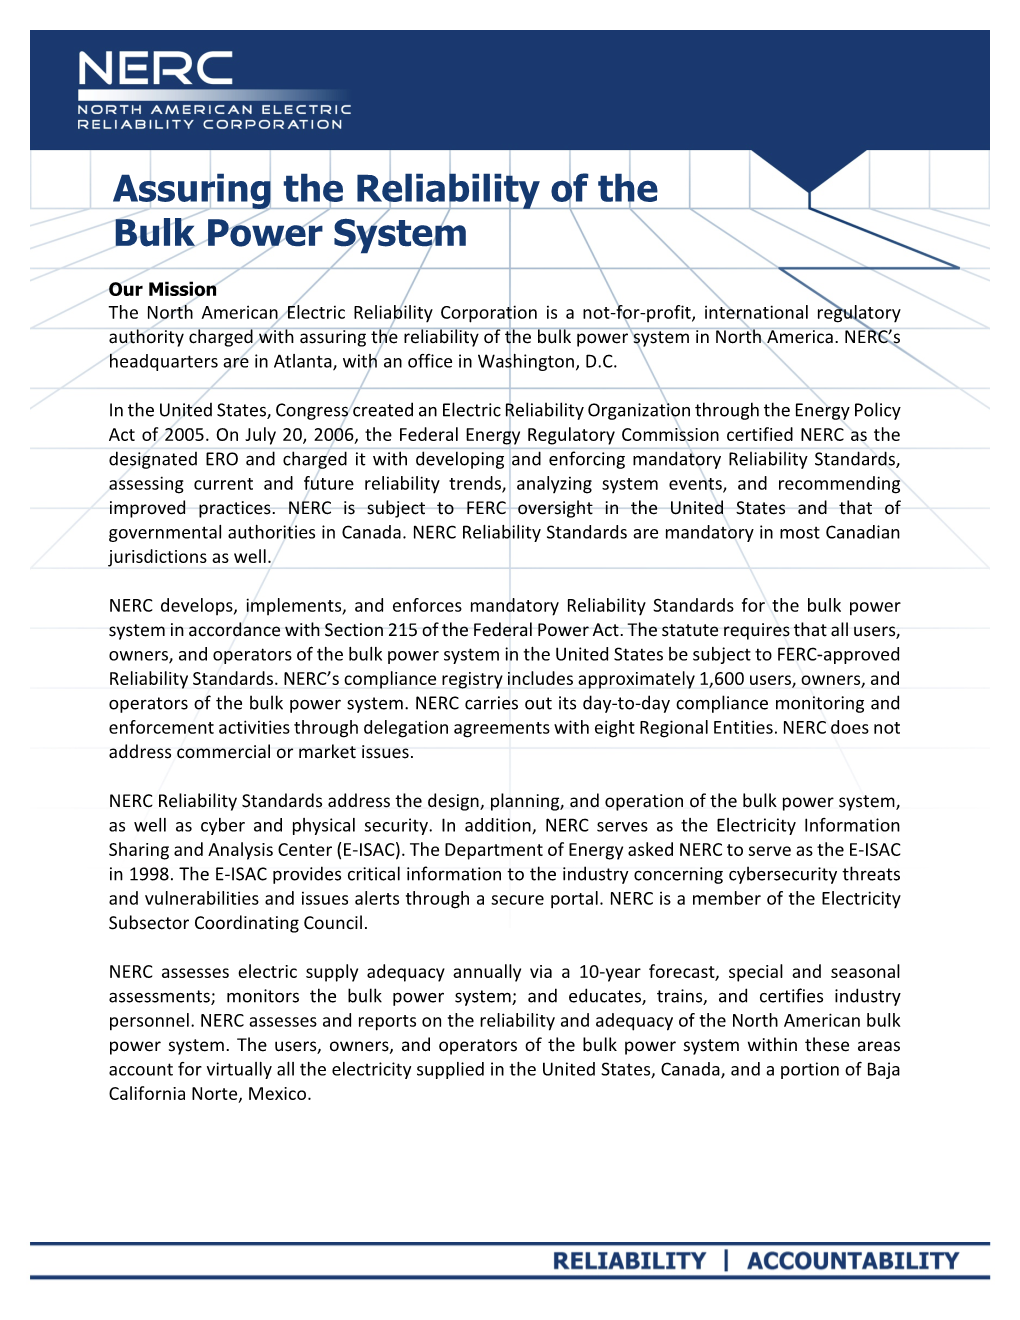 Assuring the Reliability of the Bulk Power System